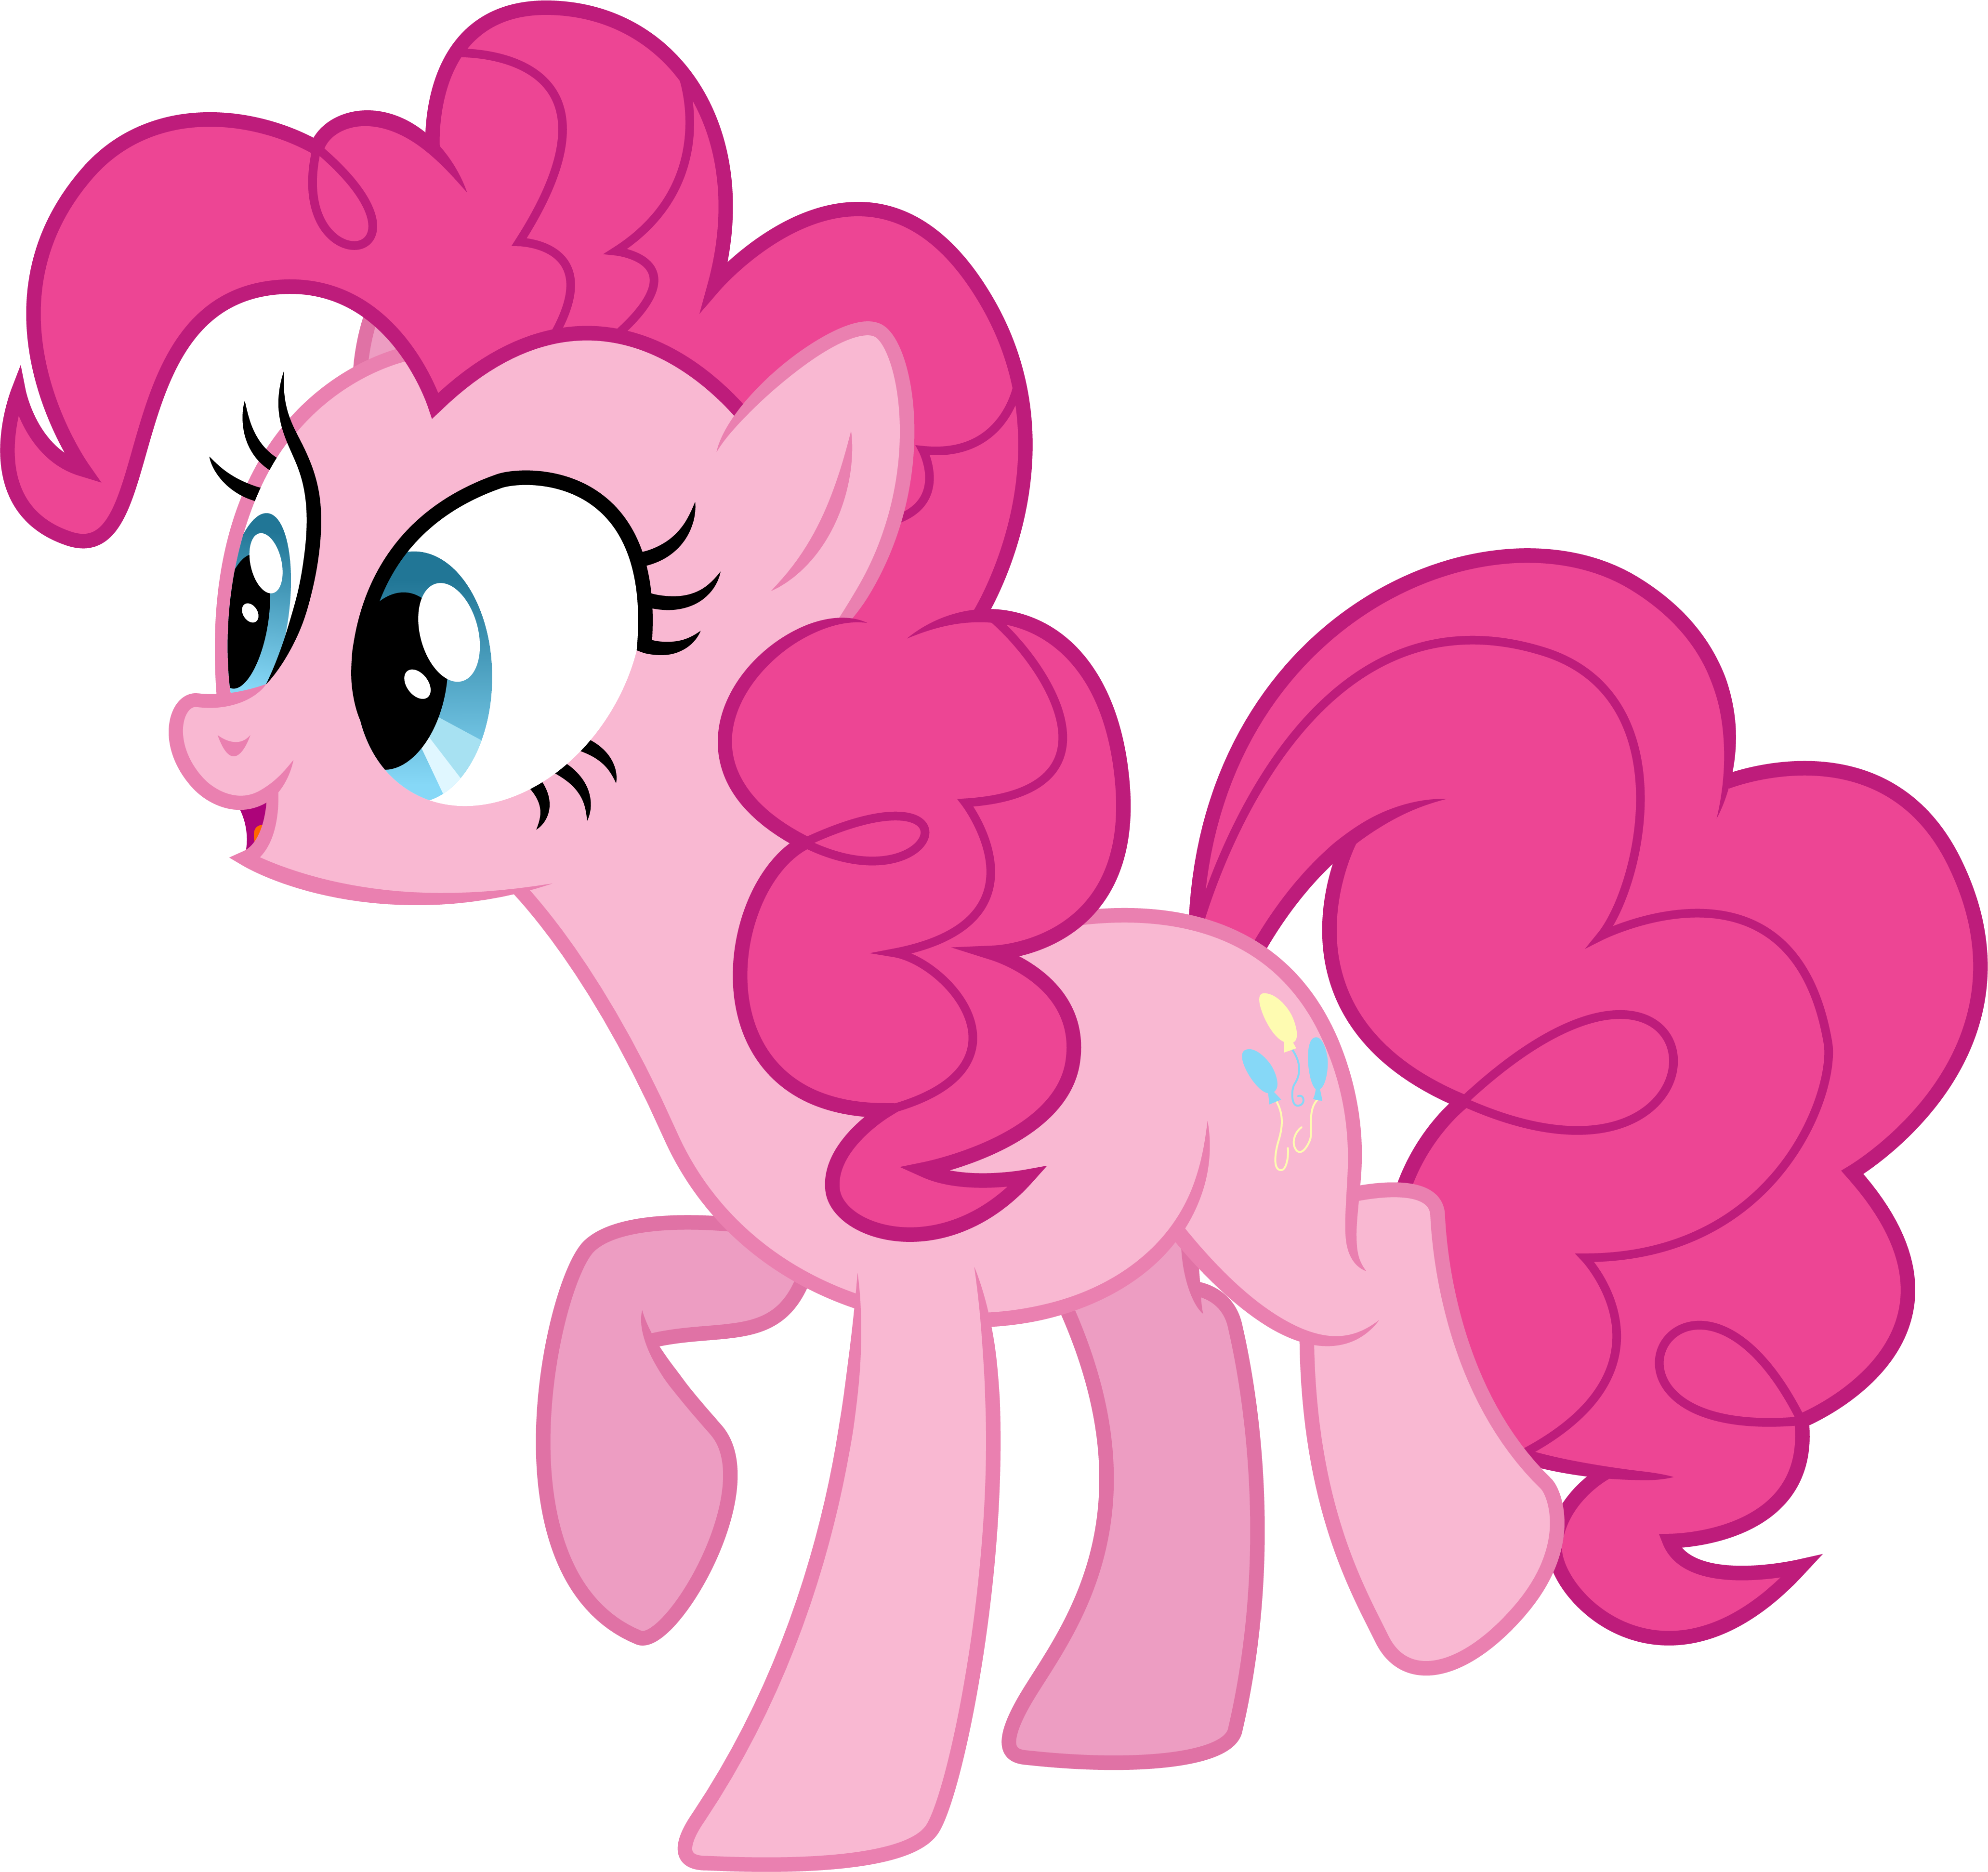 Как зовут розовую пони. МЛП Пинки. МЛП Пинки Пай. Поняшка Пинки Пай. Пинки Пай вектор МЛП.